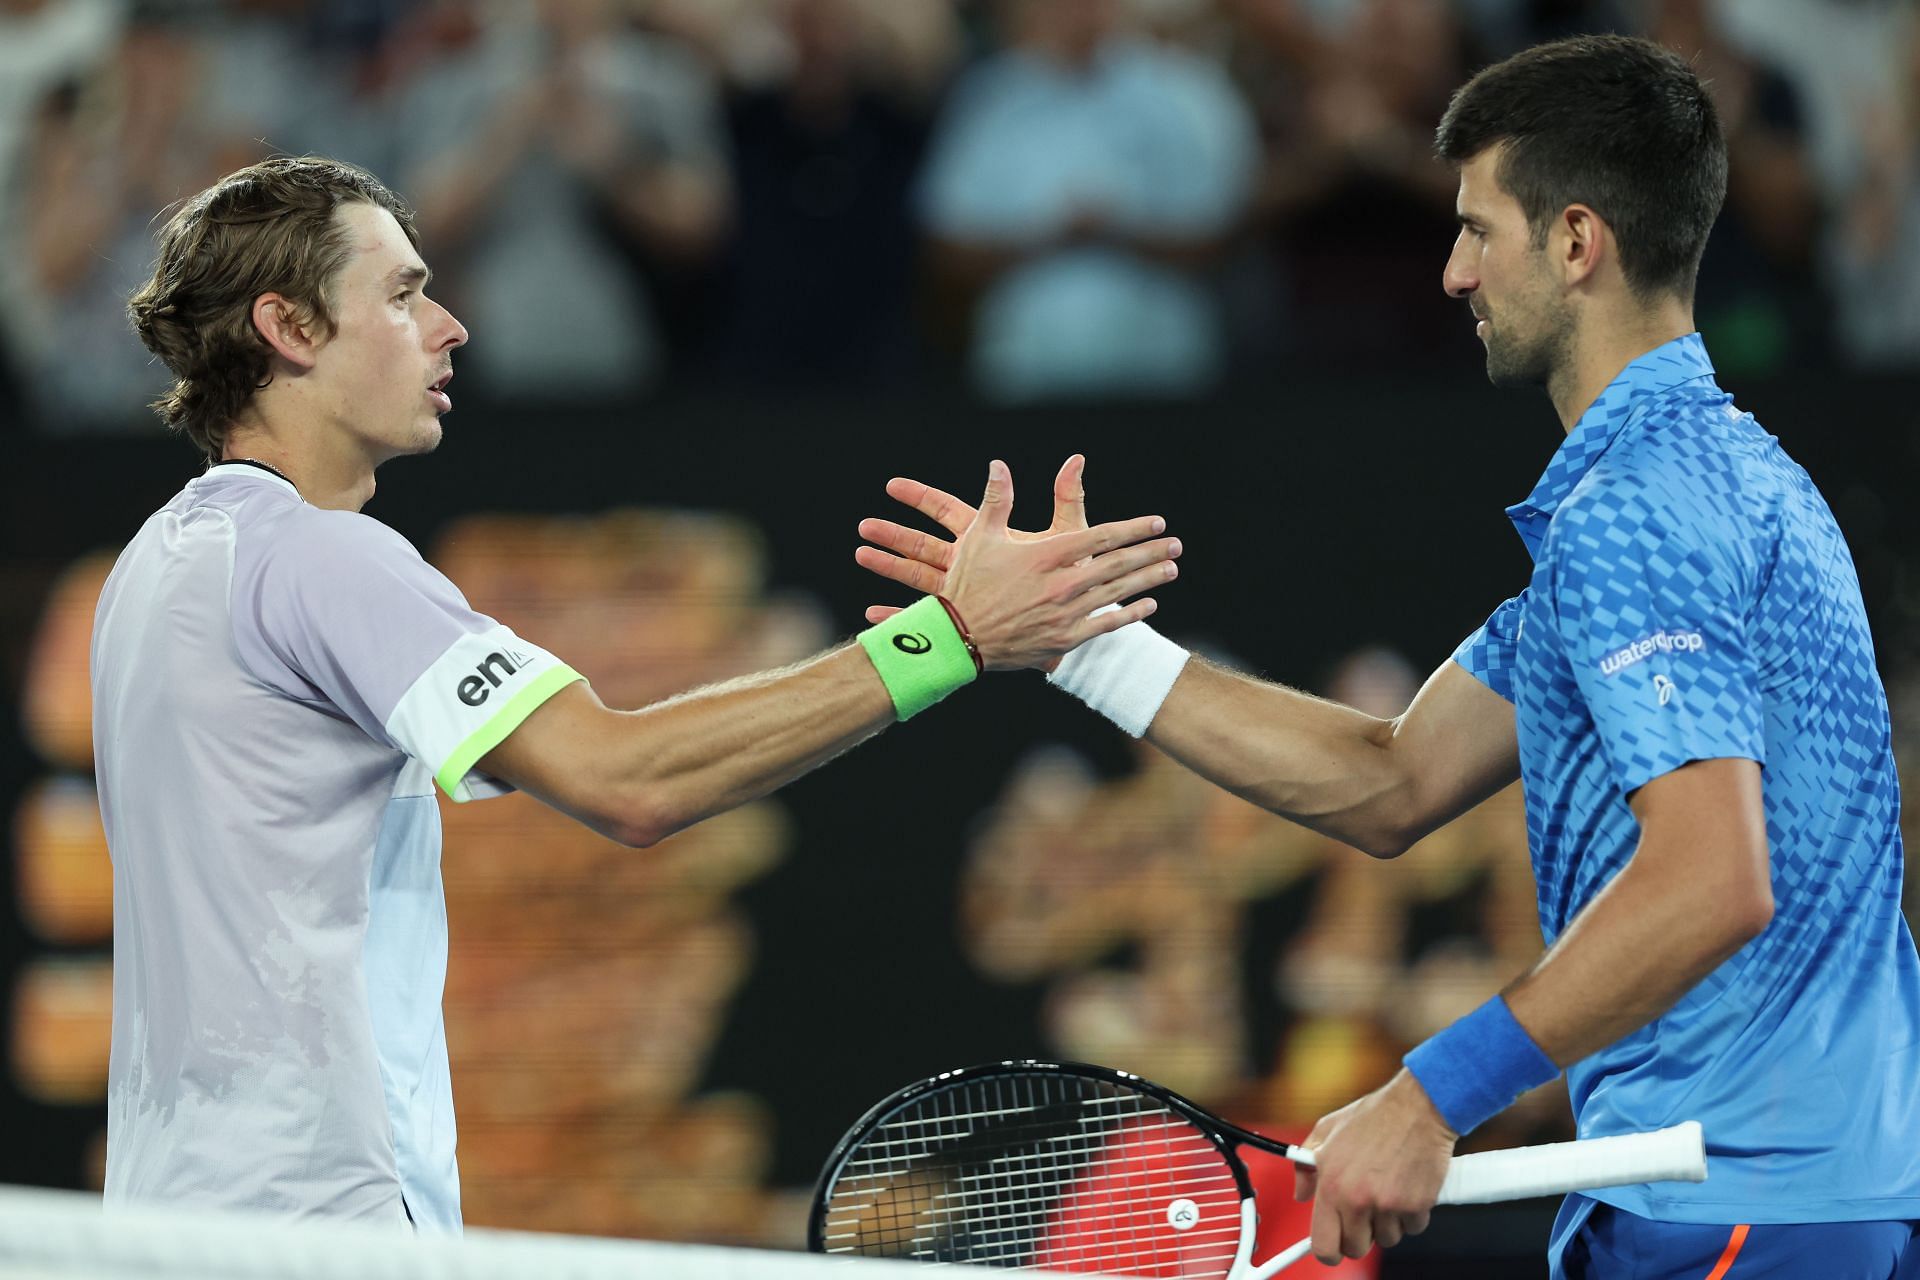 Novak Djokovic will take on Andrey Rublev on wednesday after defeating home favorite Alex de Minaur